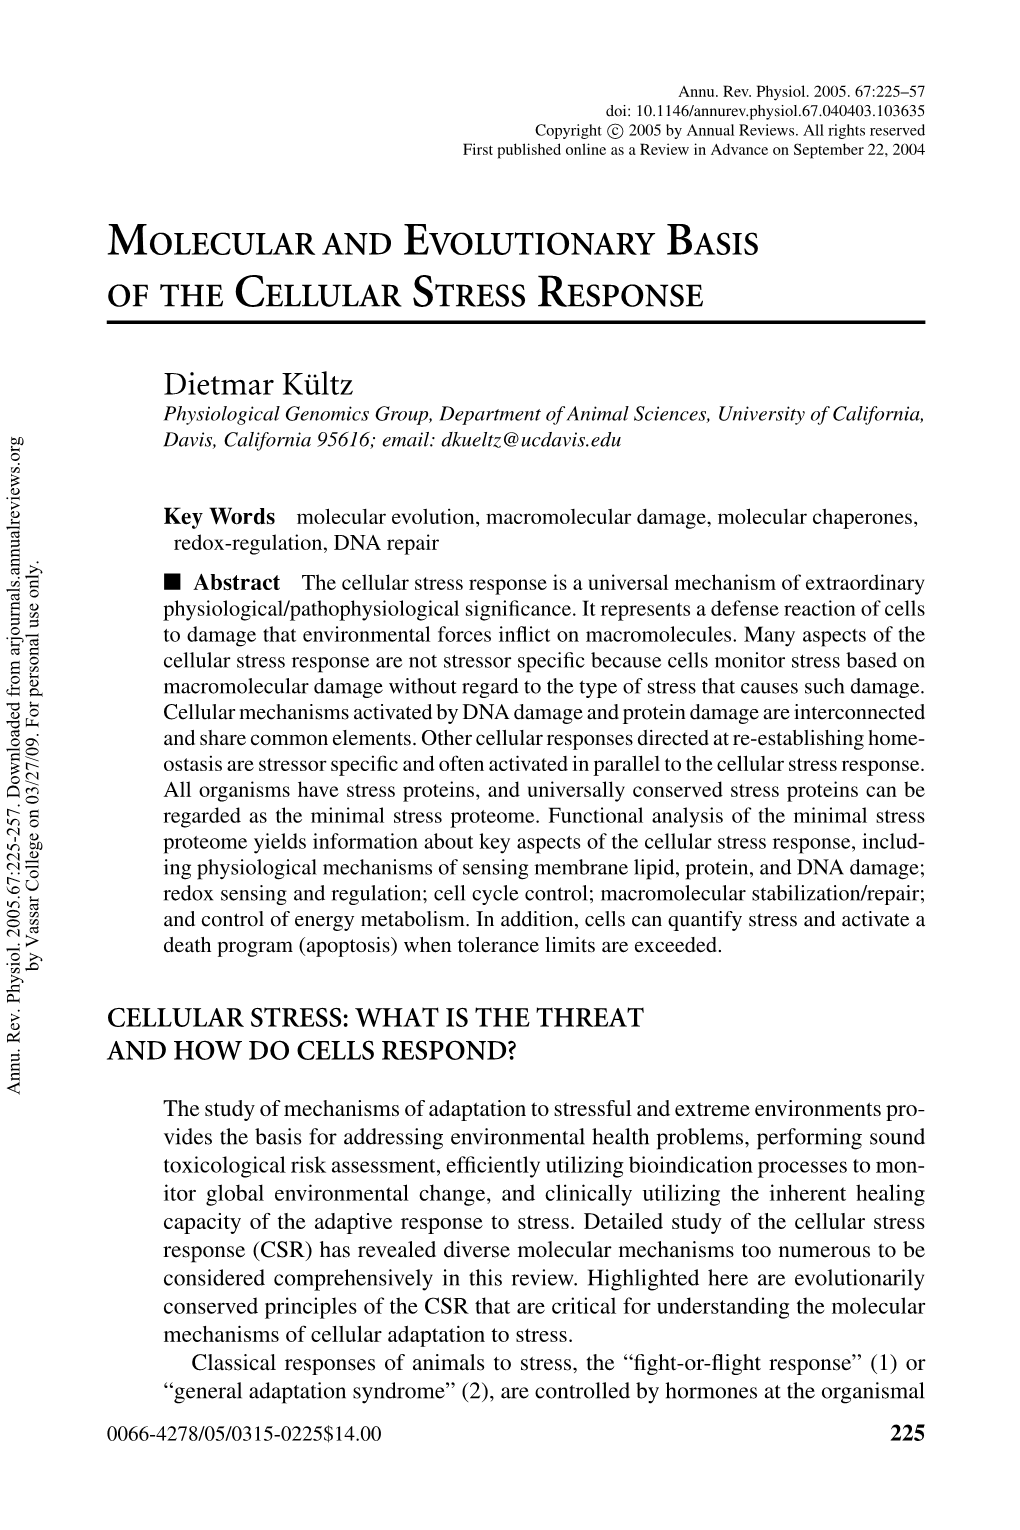 Cellular Stress Response